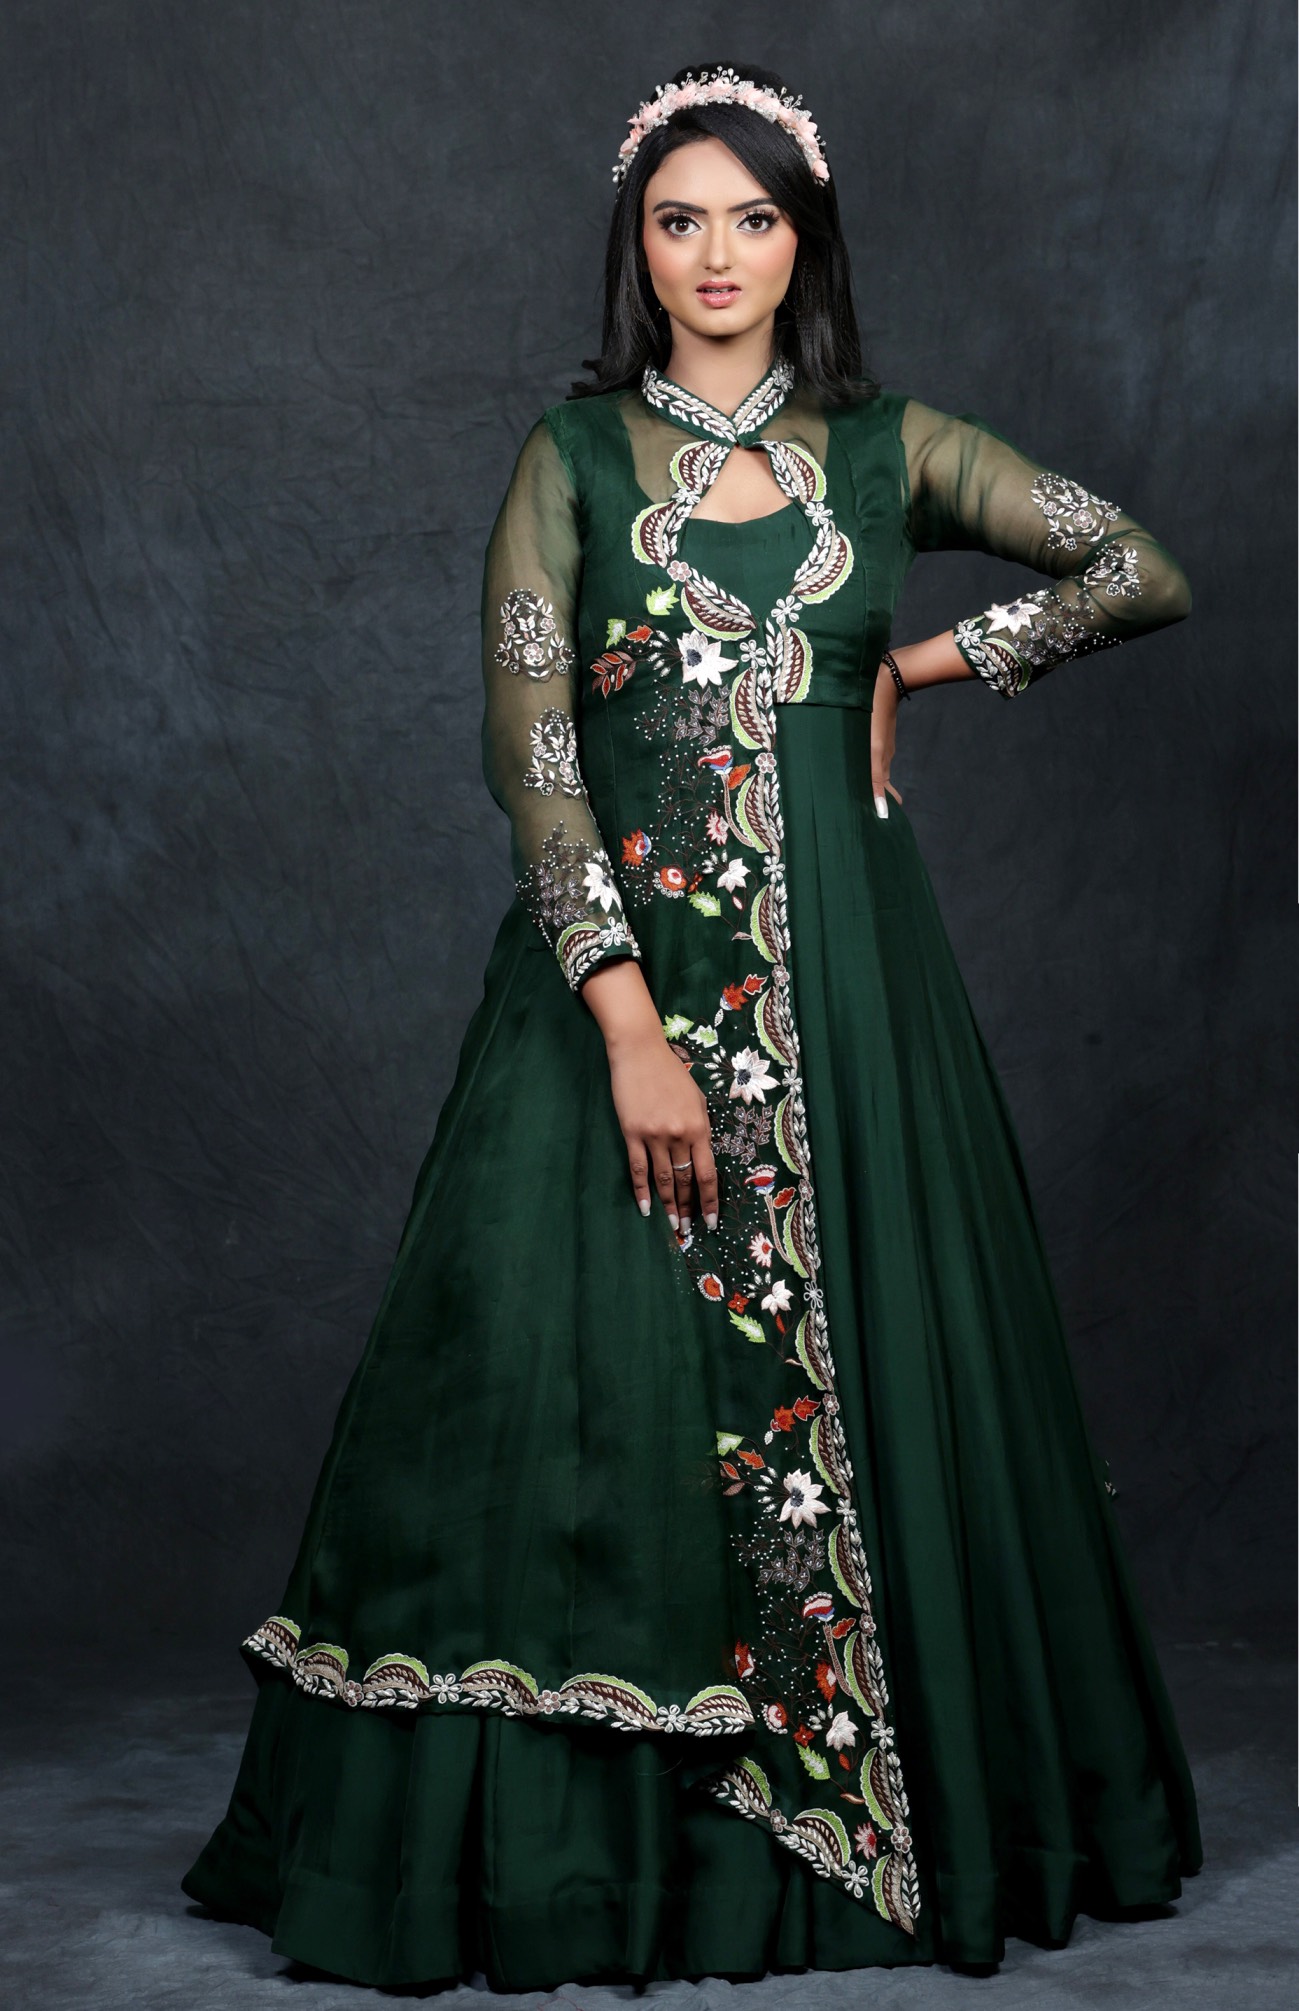 Wedding reception dress | Green wedding dresses, Emerald green wedding dress,  Sparkly prom dresses